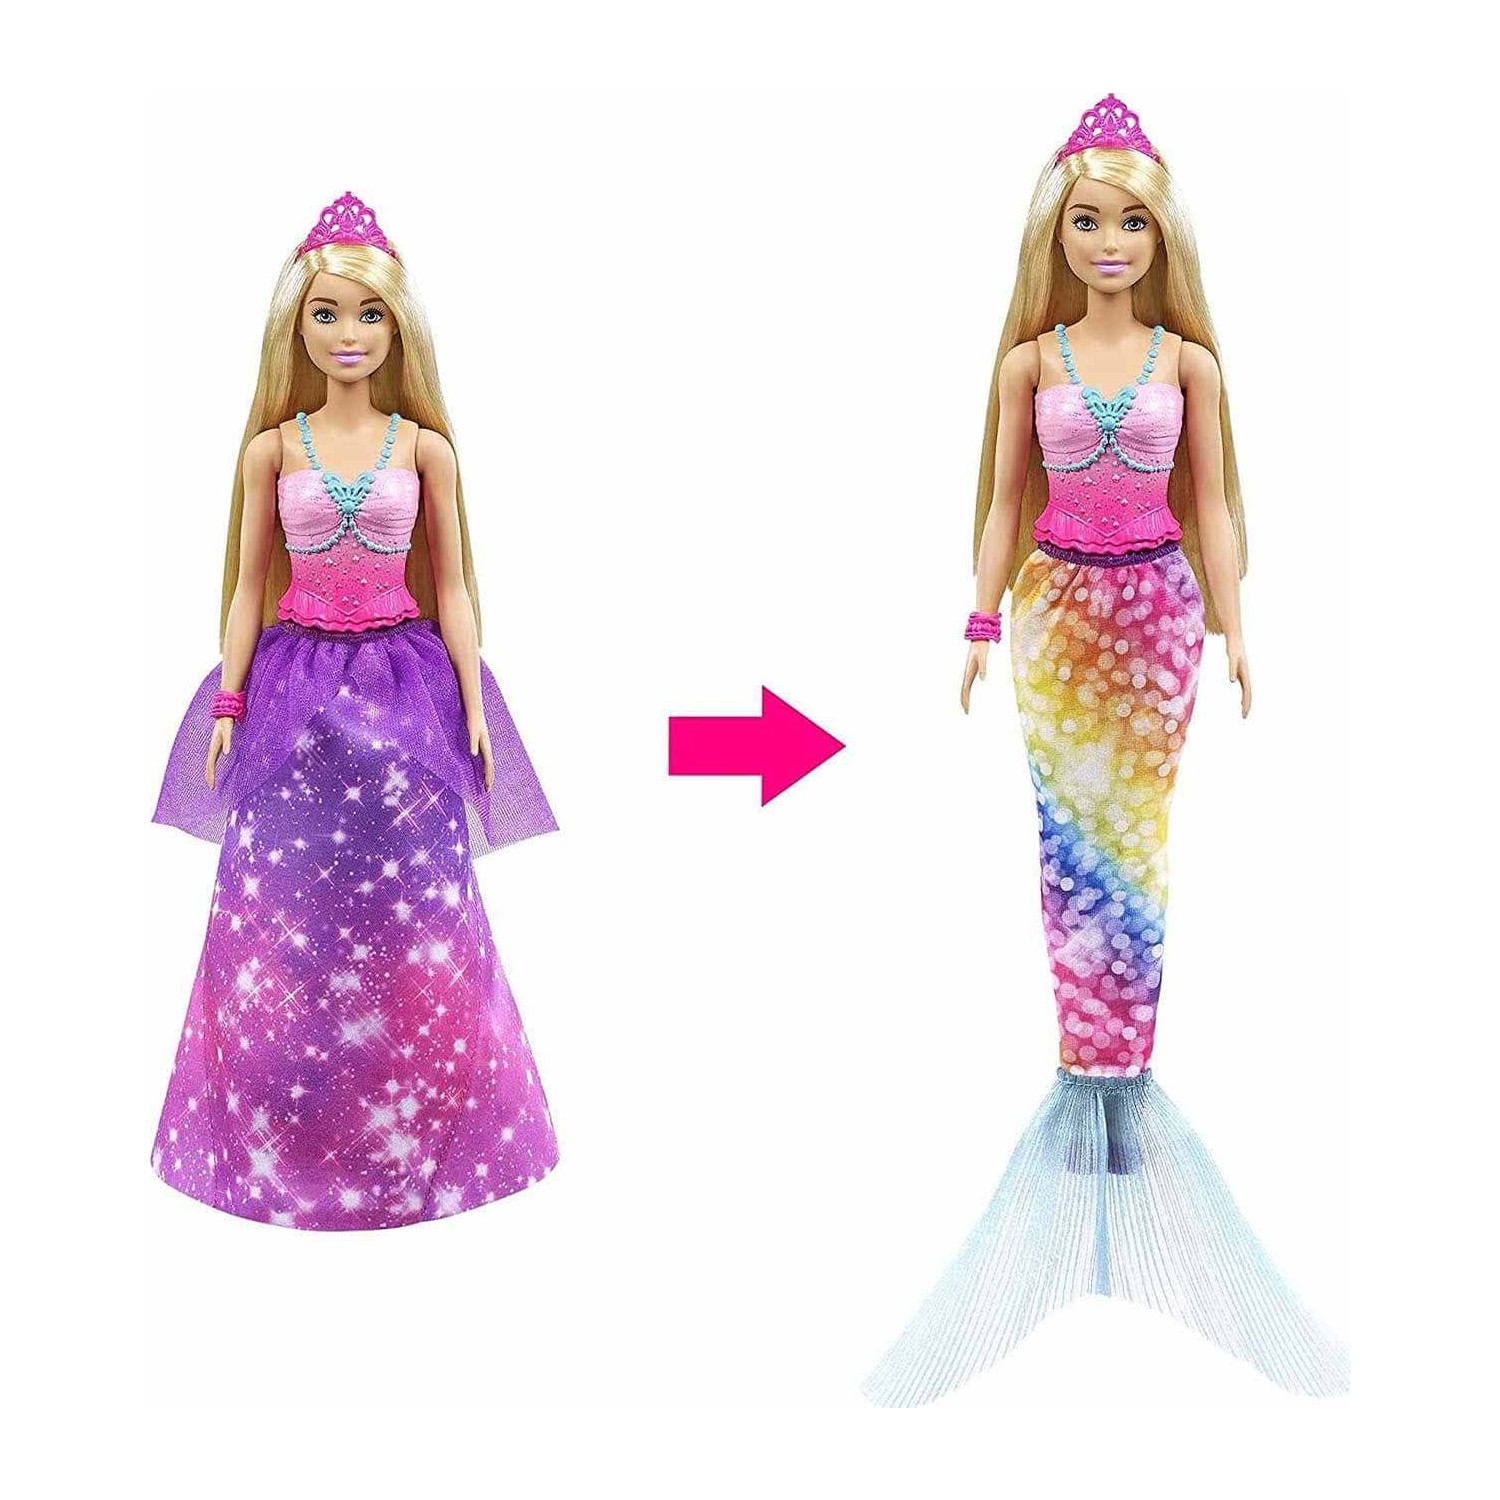 Кукла Barbie Dreamtopia 2 in 1 Princess GTF92 кукла barbie dreamtopia и аксессуары hlc28